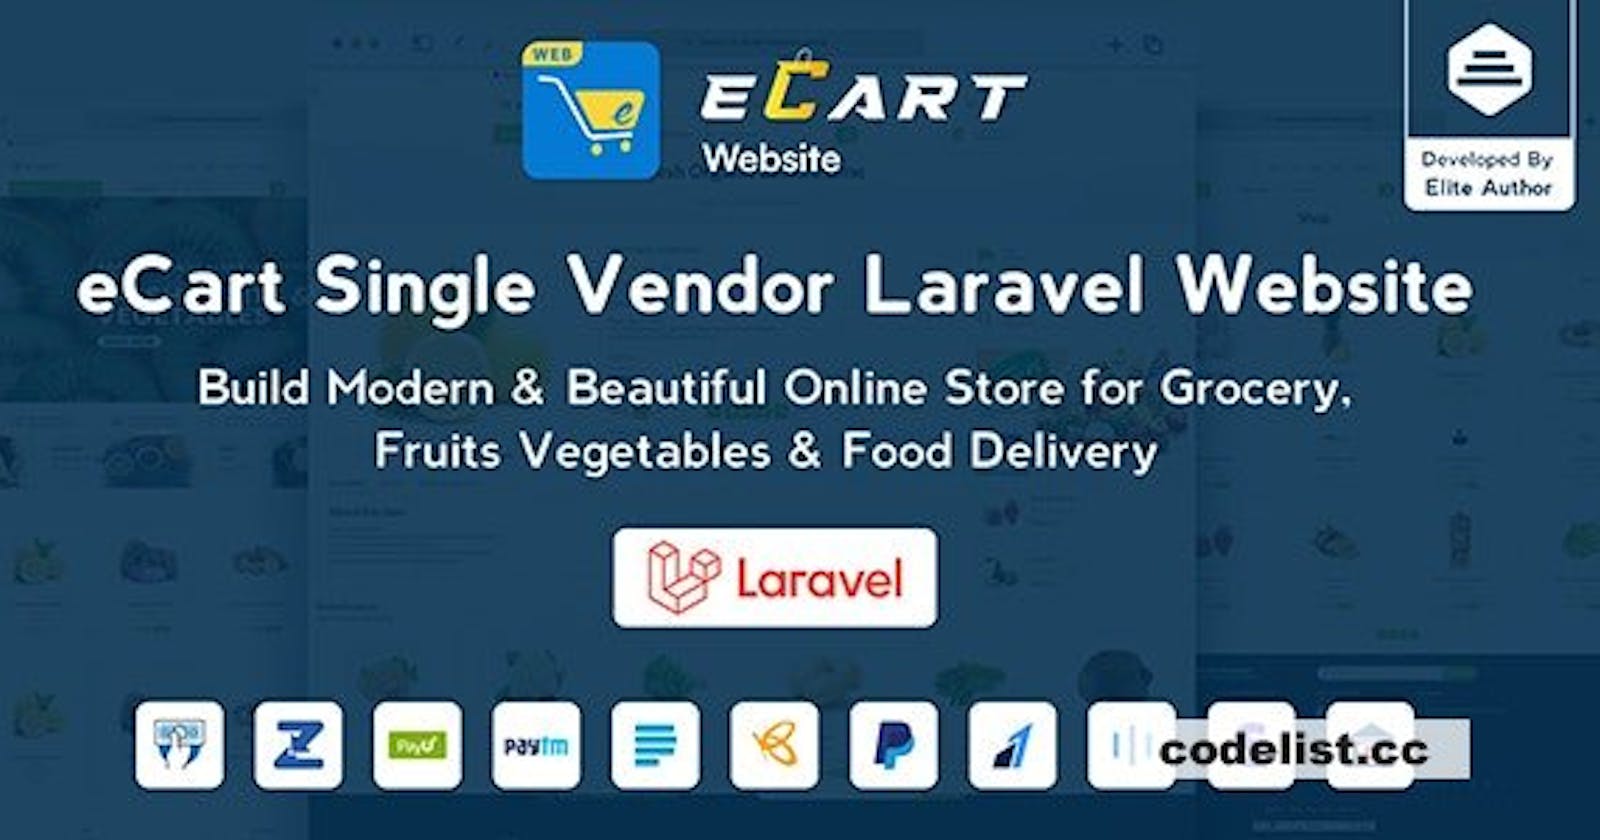 eCart Web v5.0.1 - eCommerce Store Website with Laravel